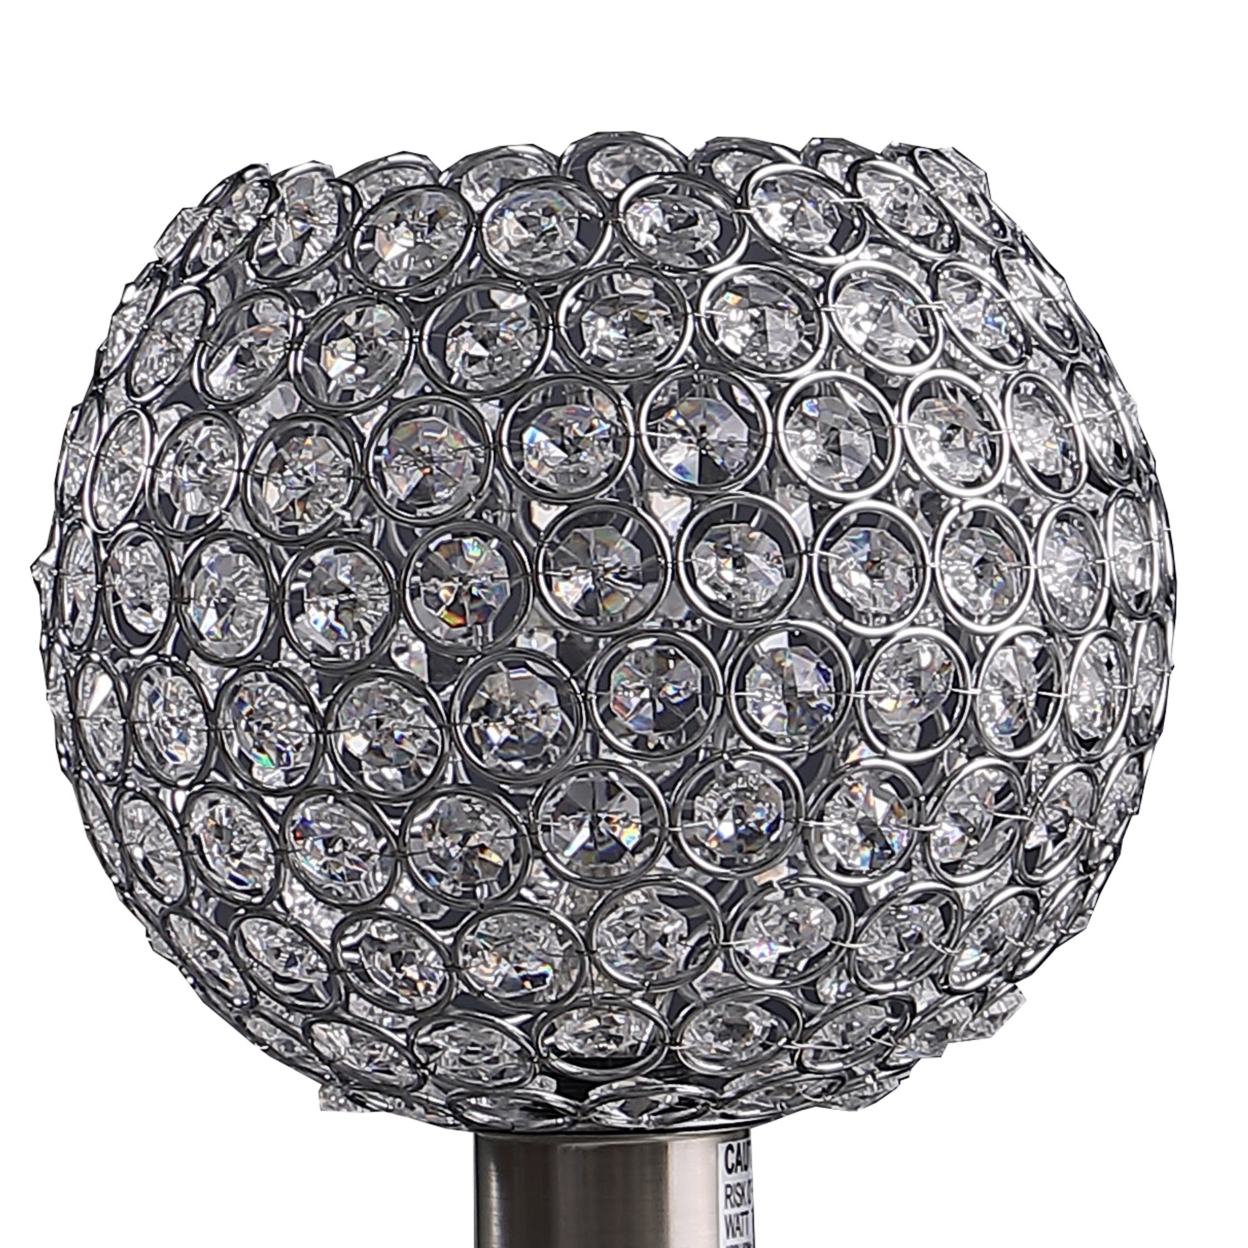 Acrylic Bead Globe Table Lamp With Metal Base, Silver- Saltoro Sherpi